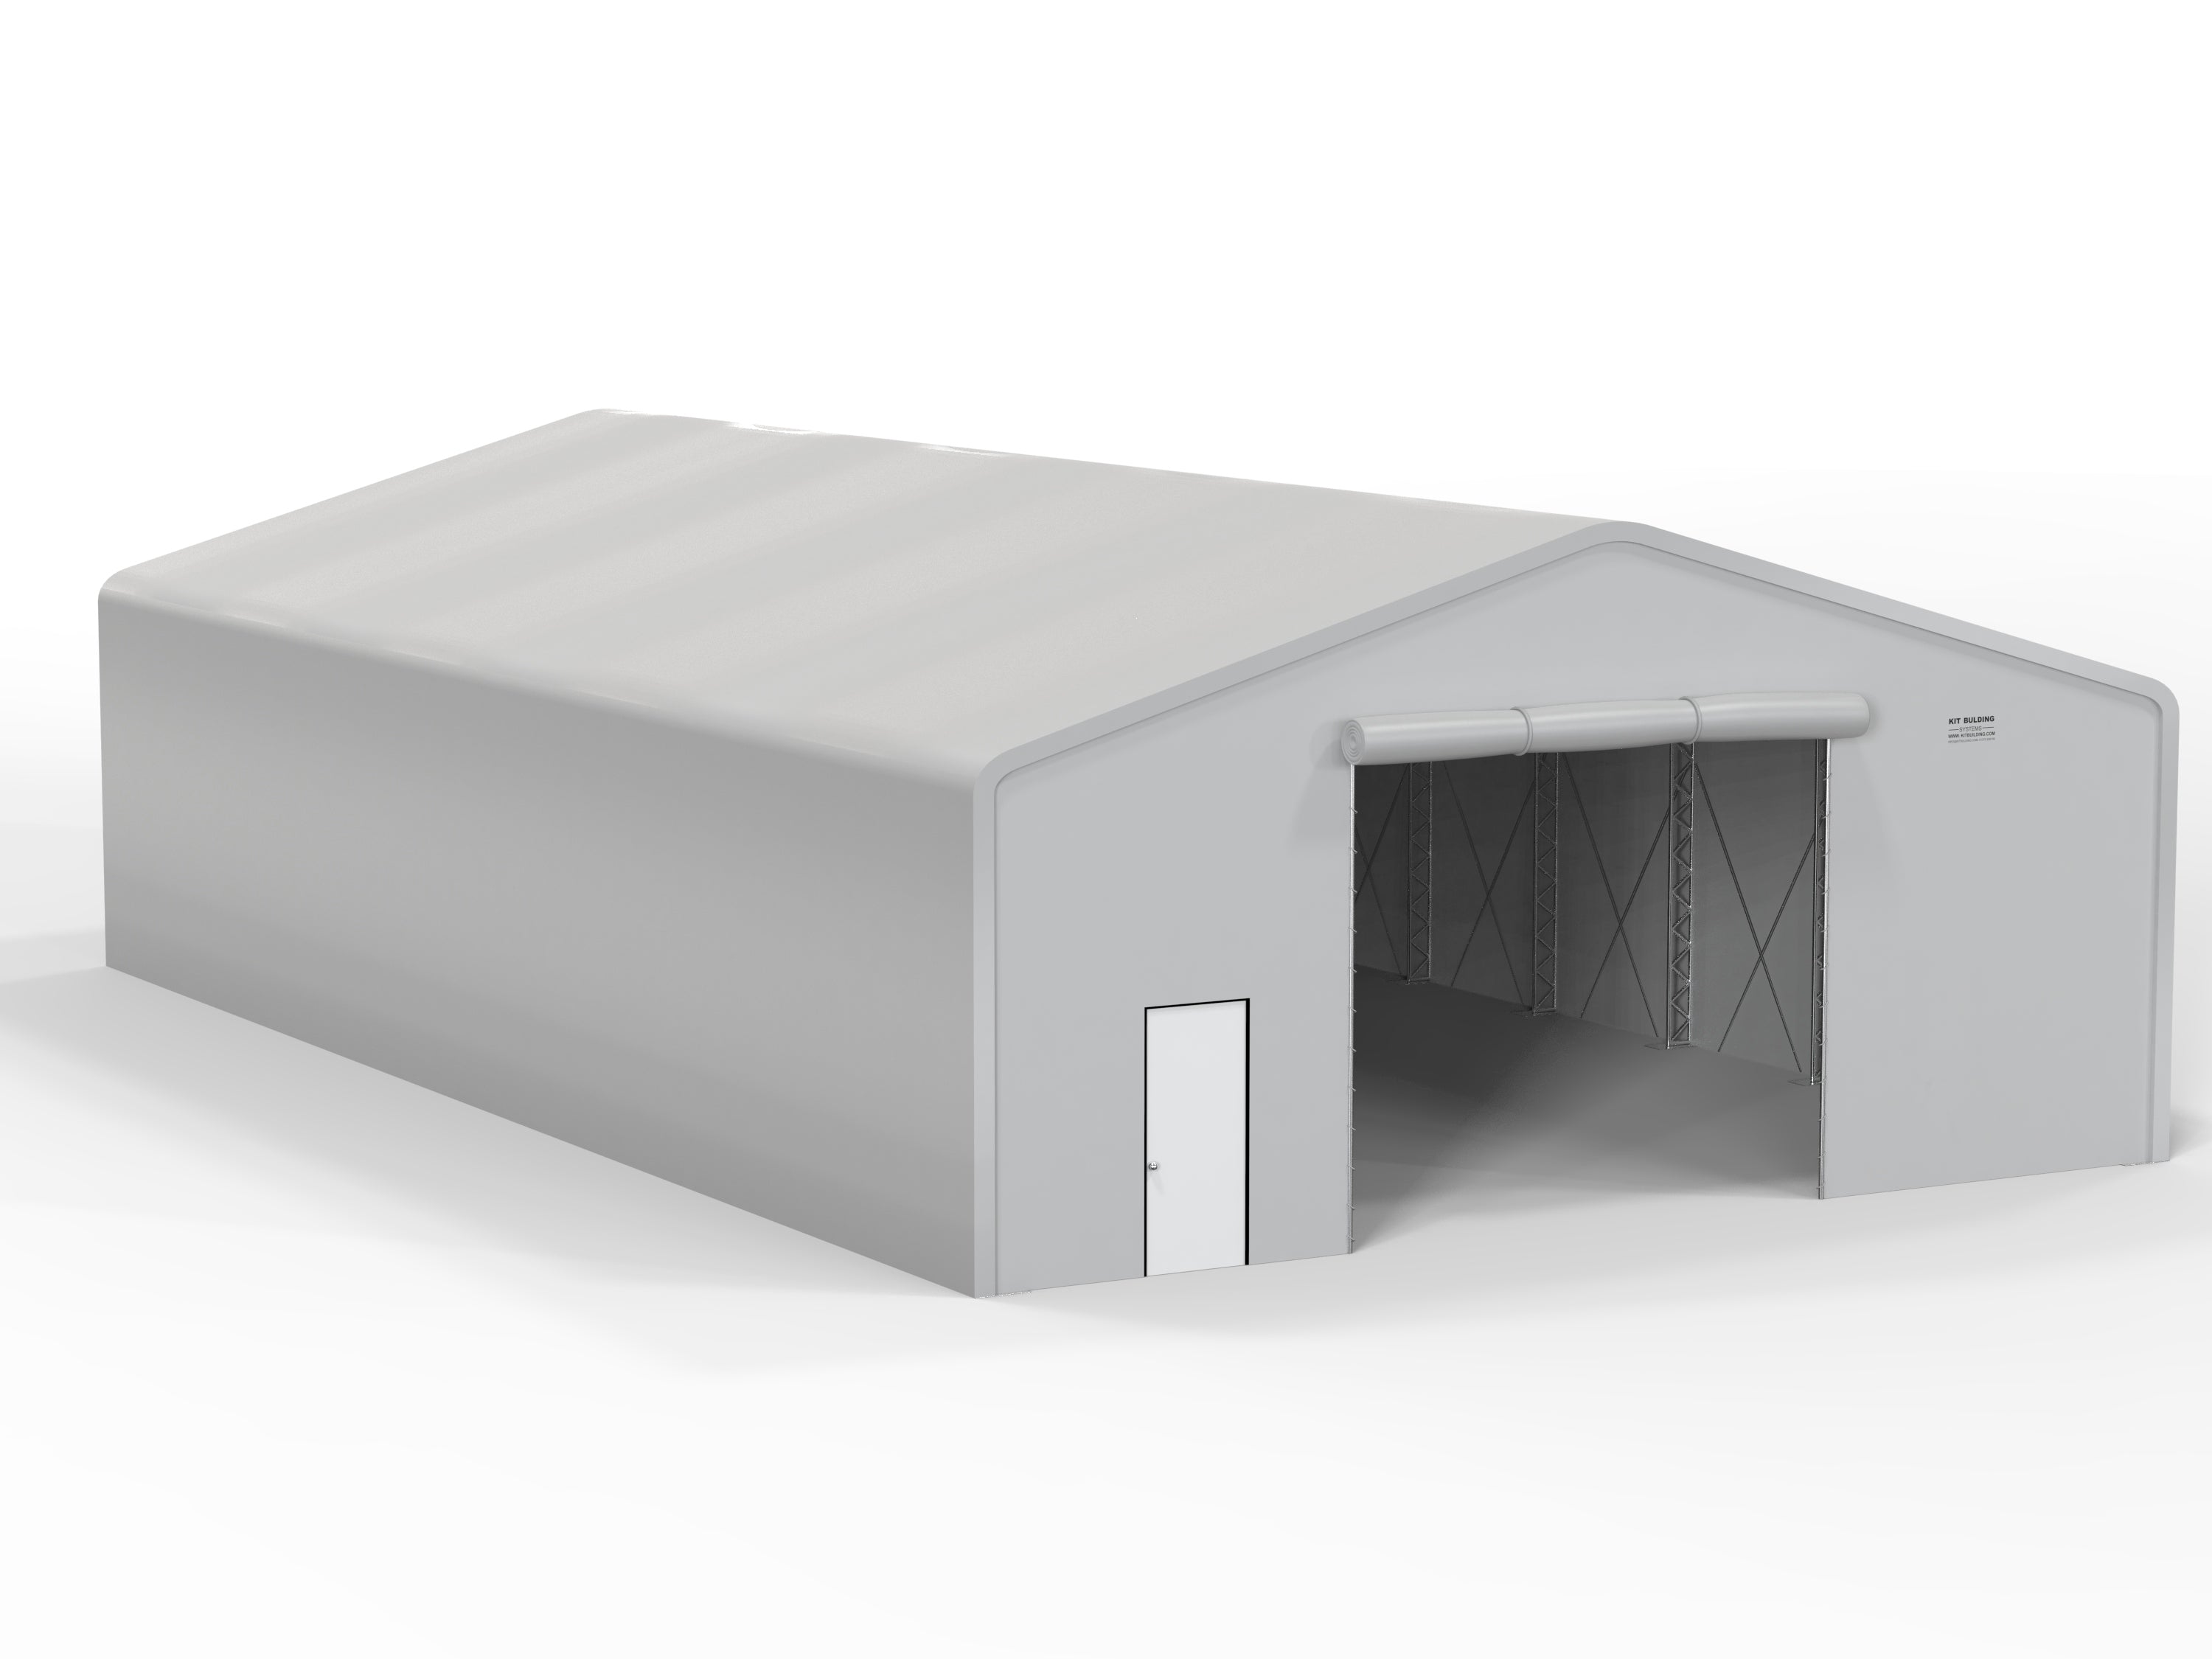 Double Truss PVC temporary storage building - Grey - Manual PVC Door